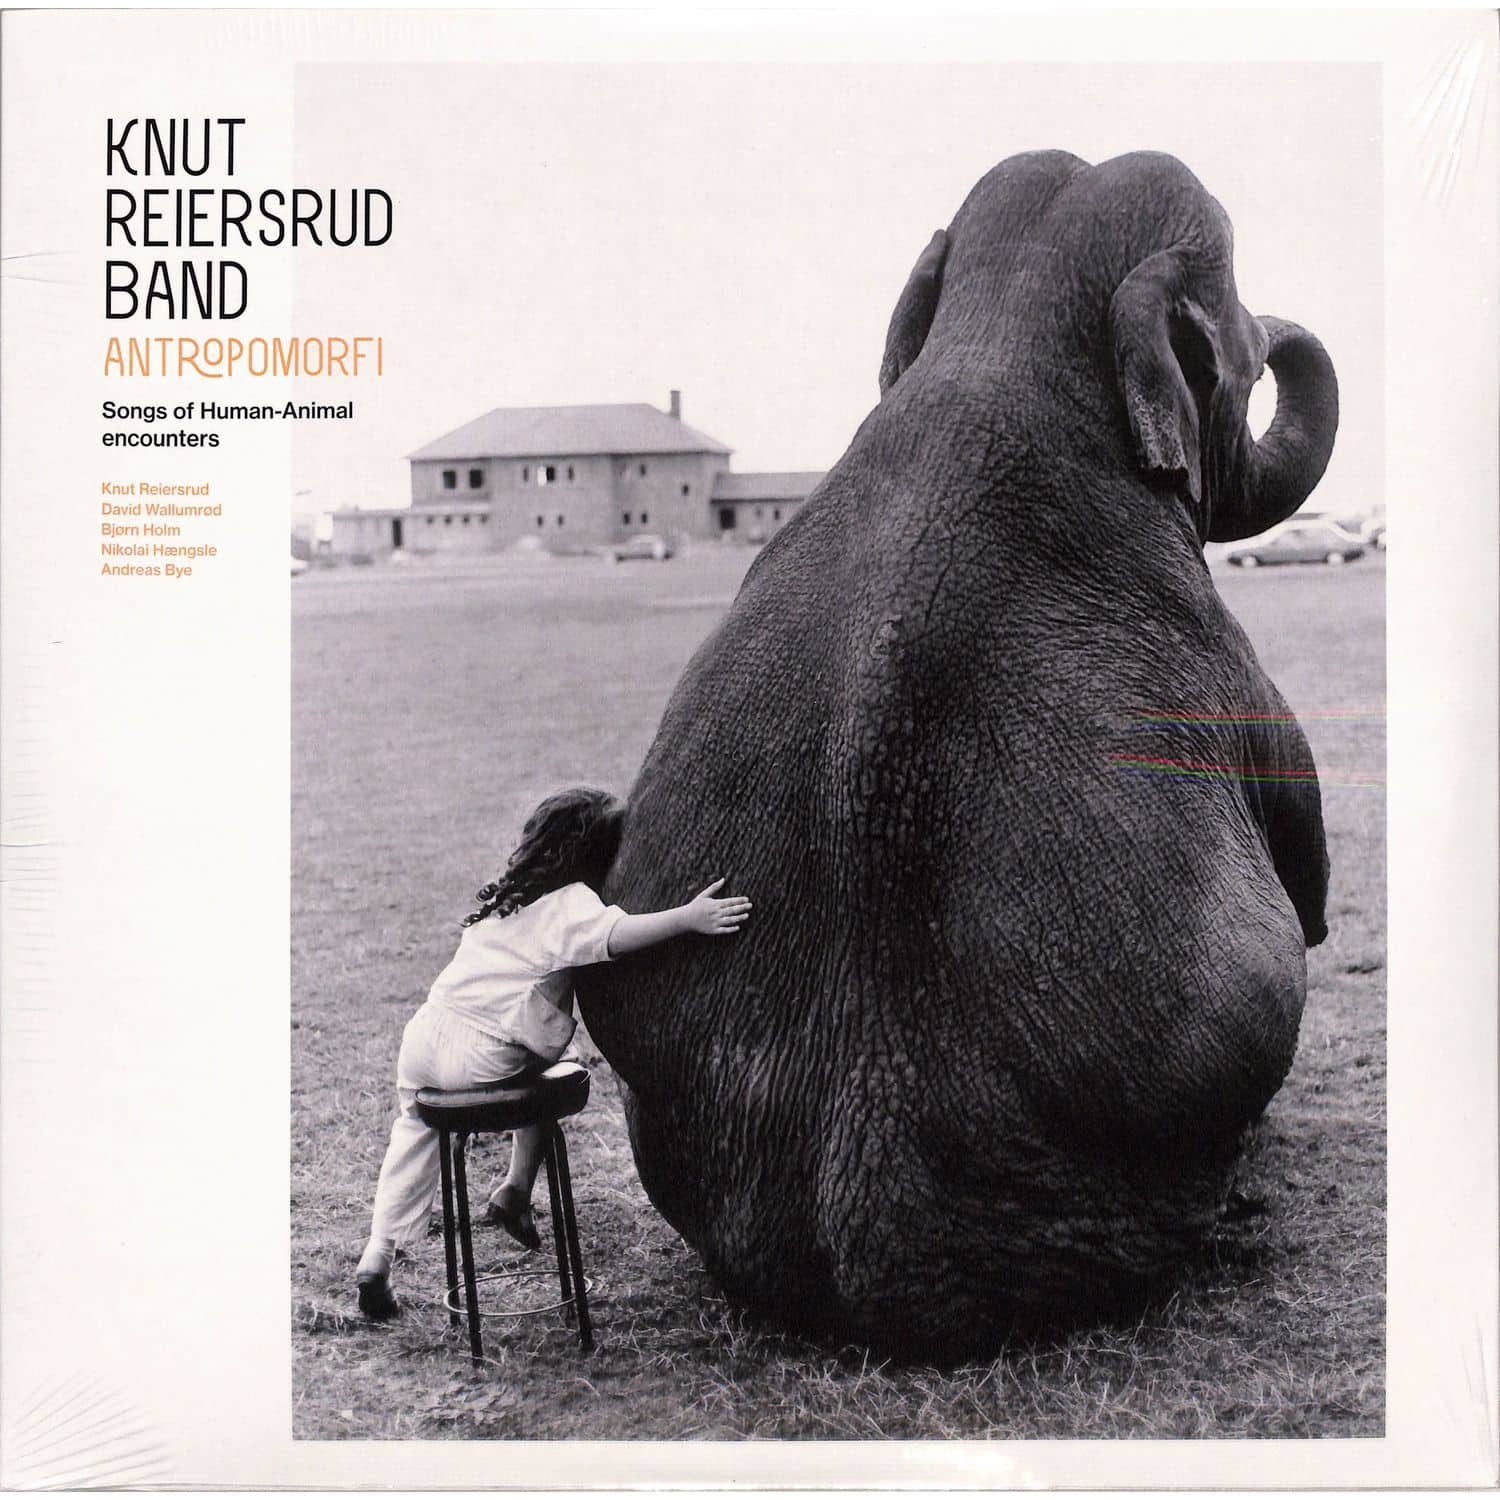 Knut Band Reiersrud - ANTROPOMORFI